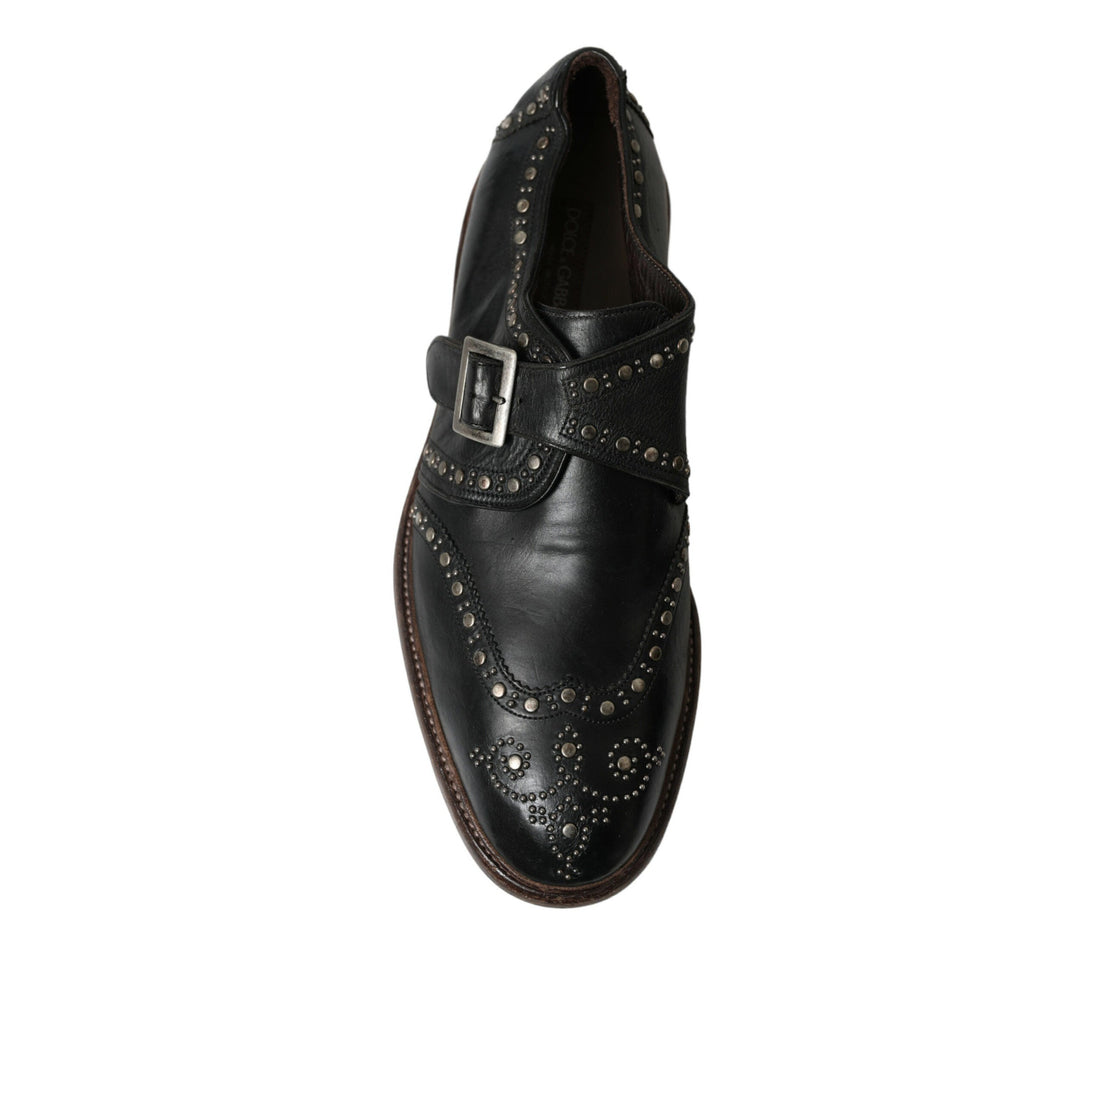 Dolce & Gabbana Black Leather Monk Strap Studded Dress Shoes